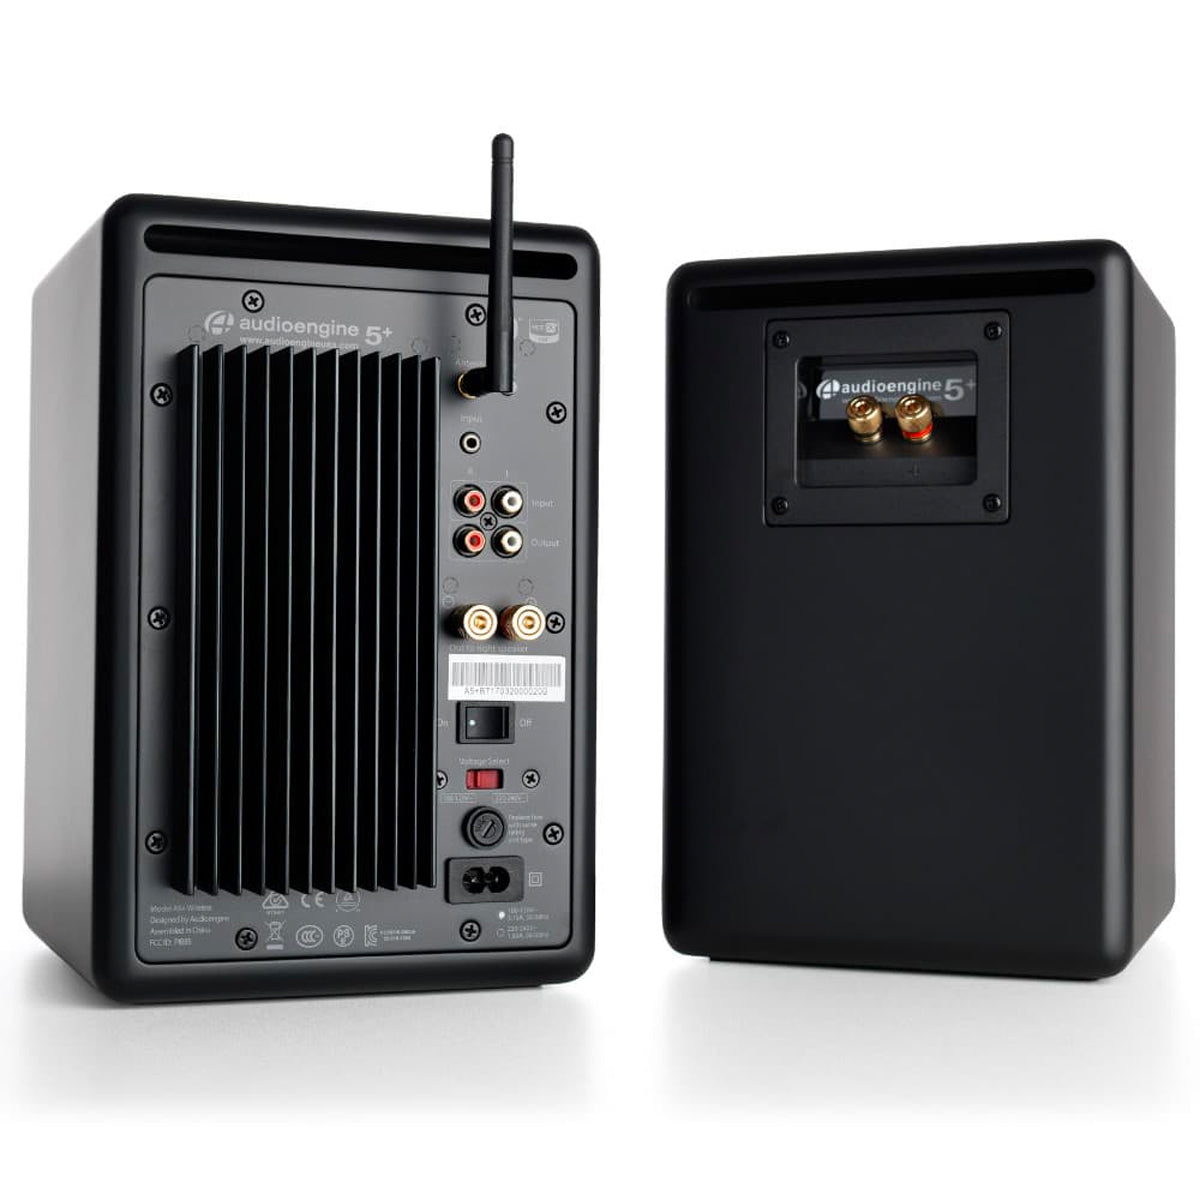 Audioengine A5+ Powered Wireless Speakers - Satin Black - The Audio Experts